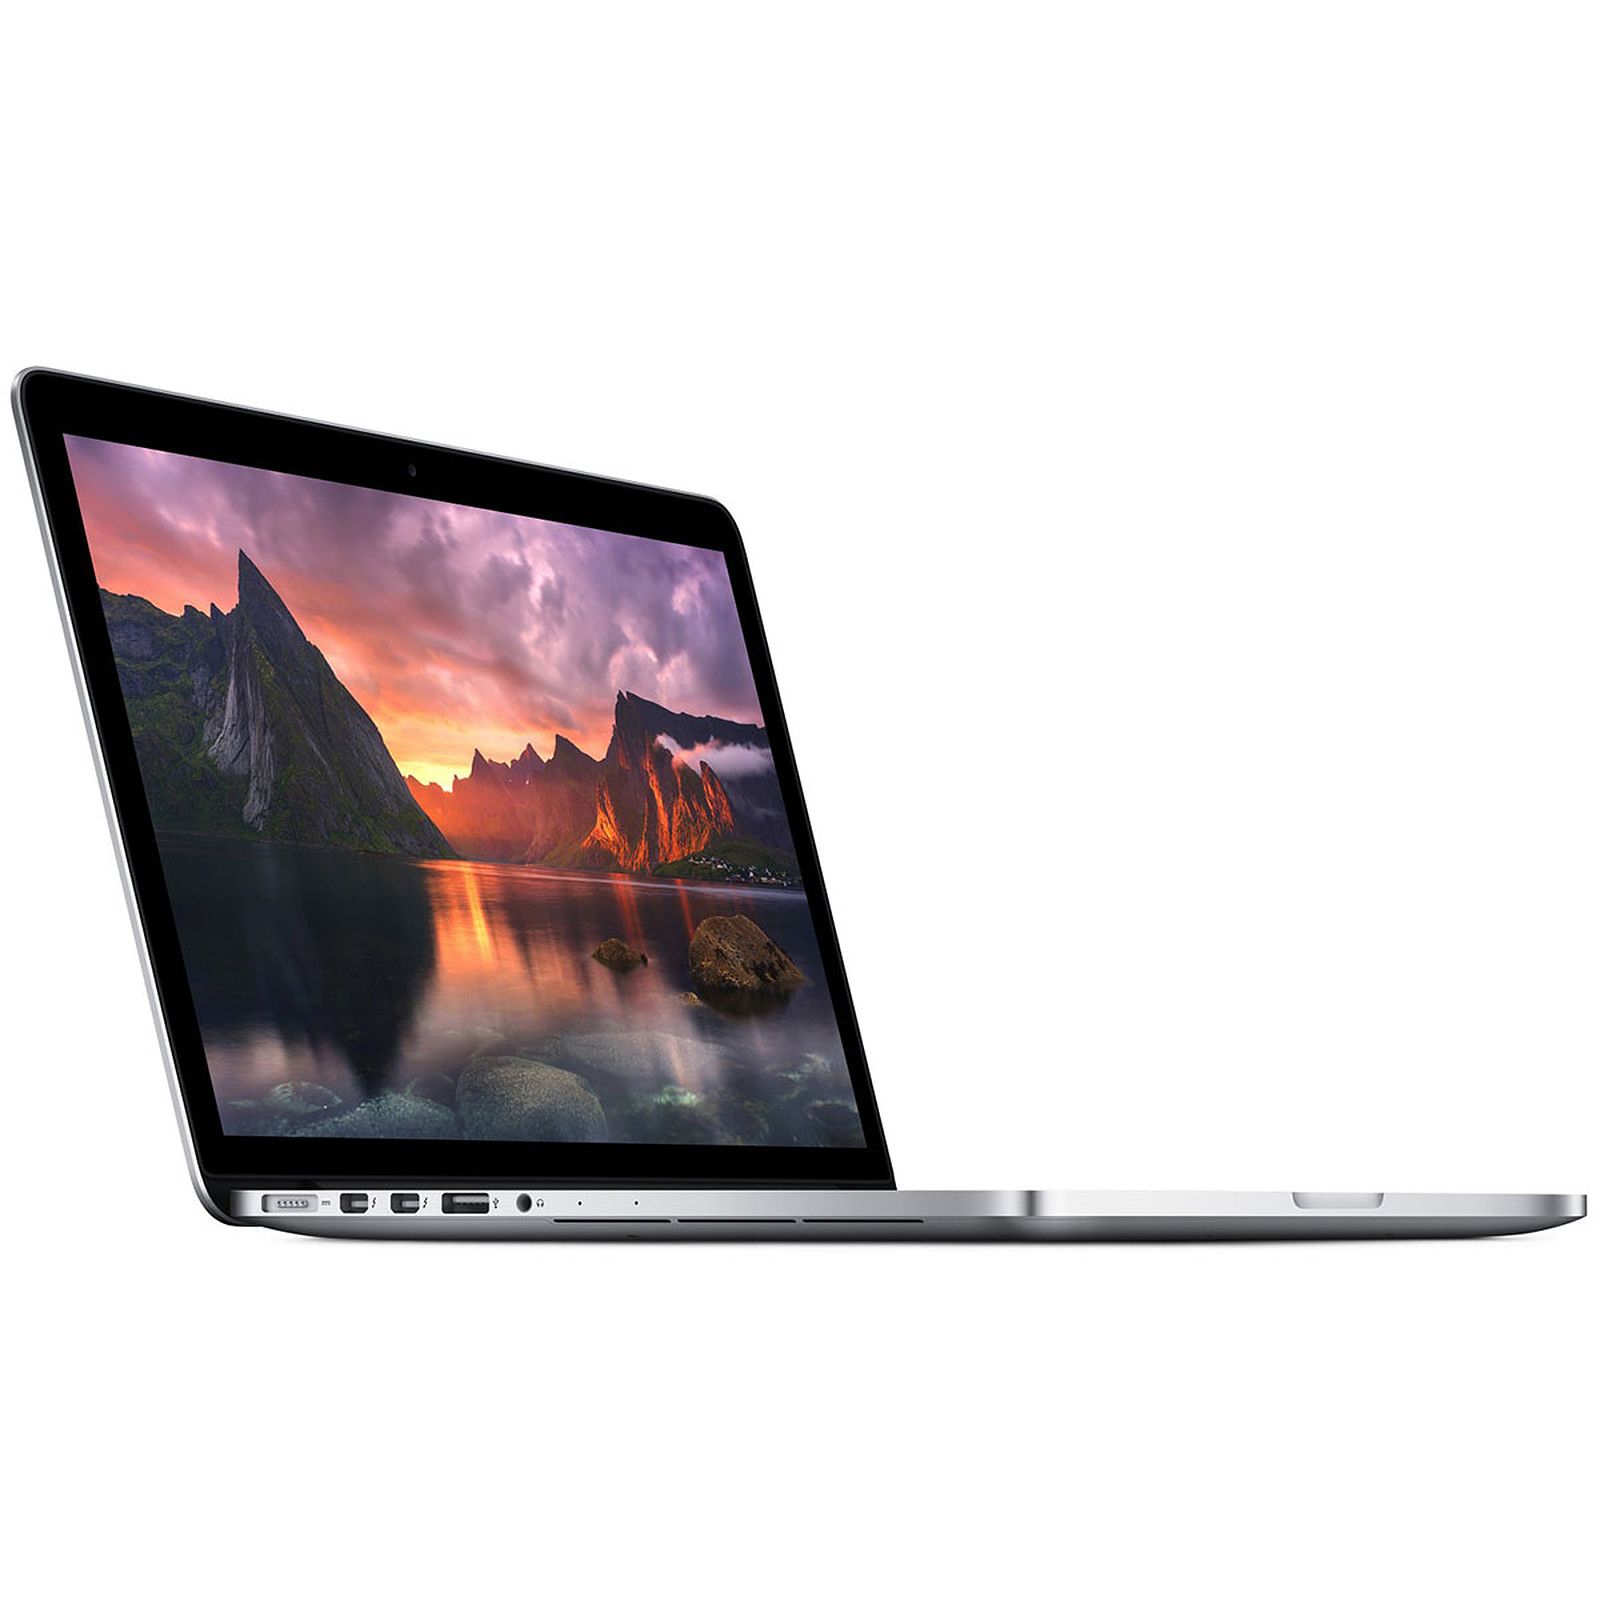 Teхника Apple - MacBook - Срочный ремонт MacBook Pro 13" (A1425)